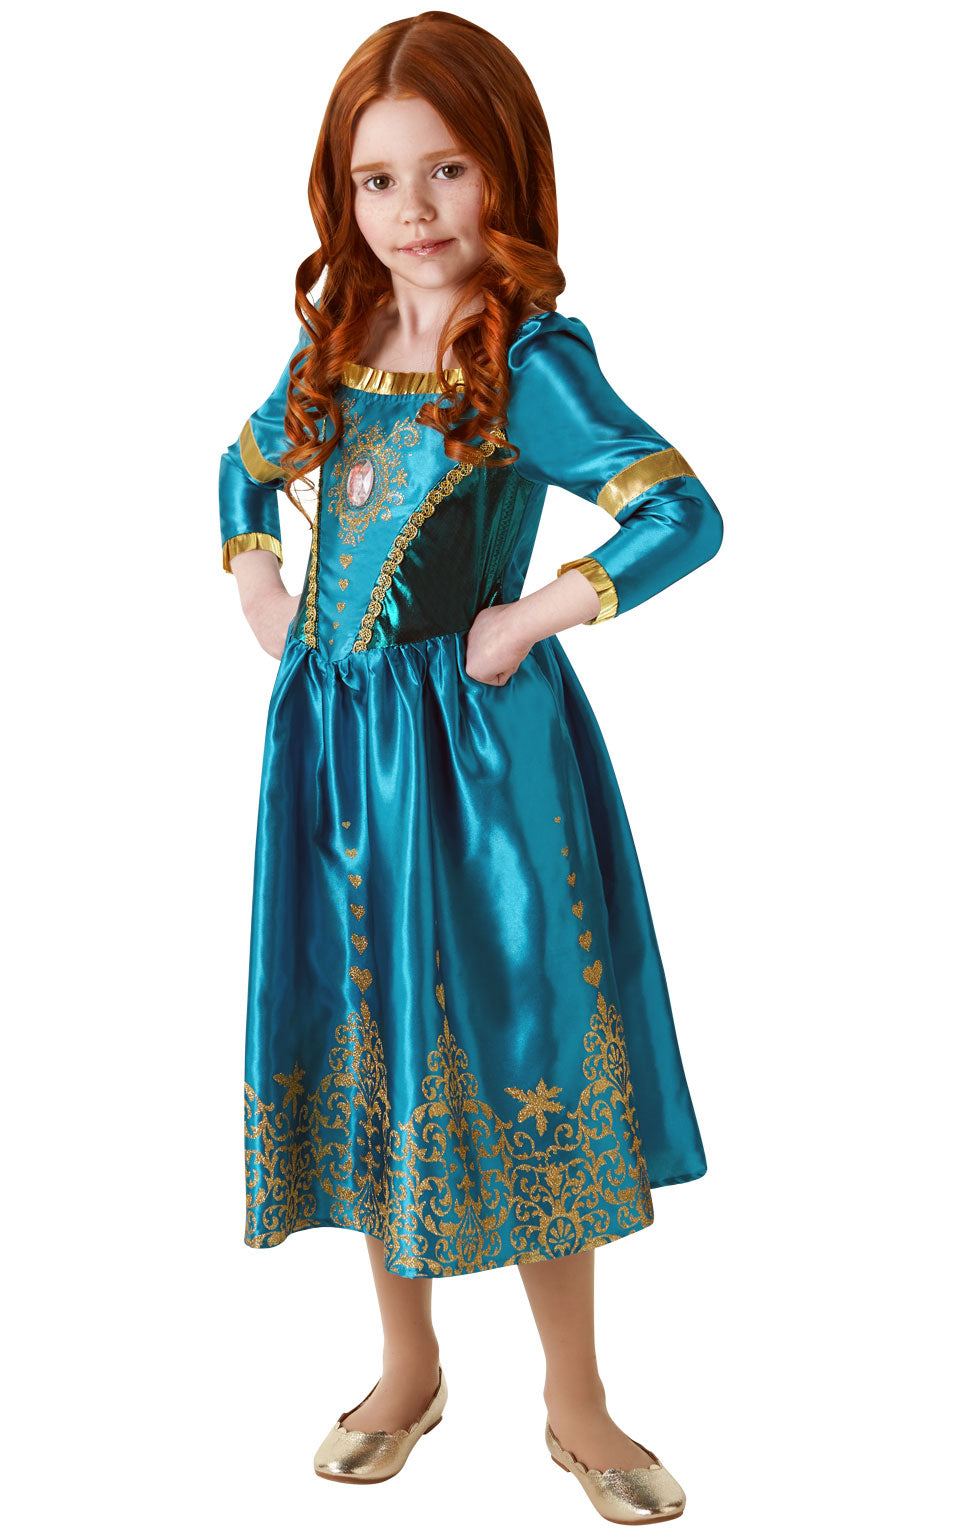 Gem Princess Merida Brave girls costume.